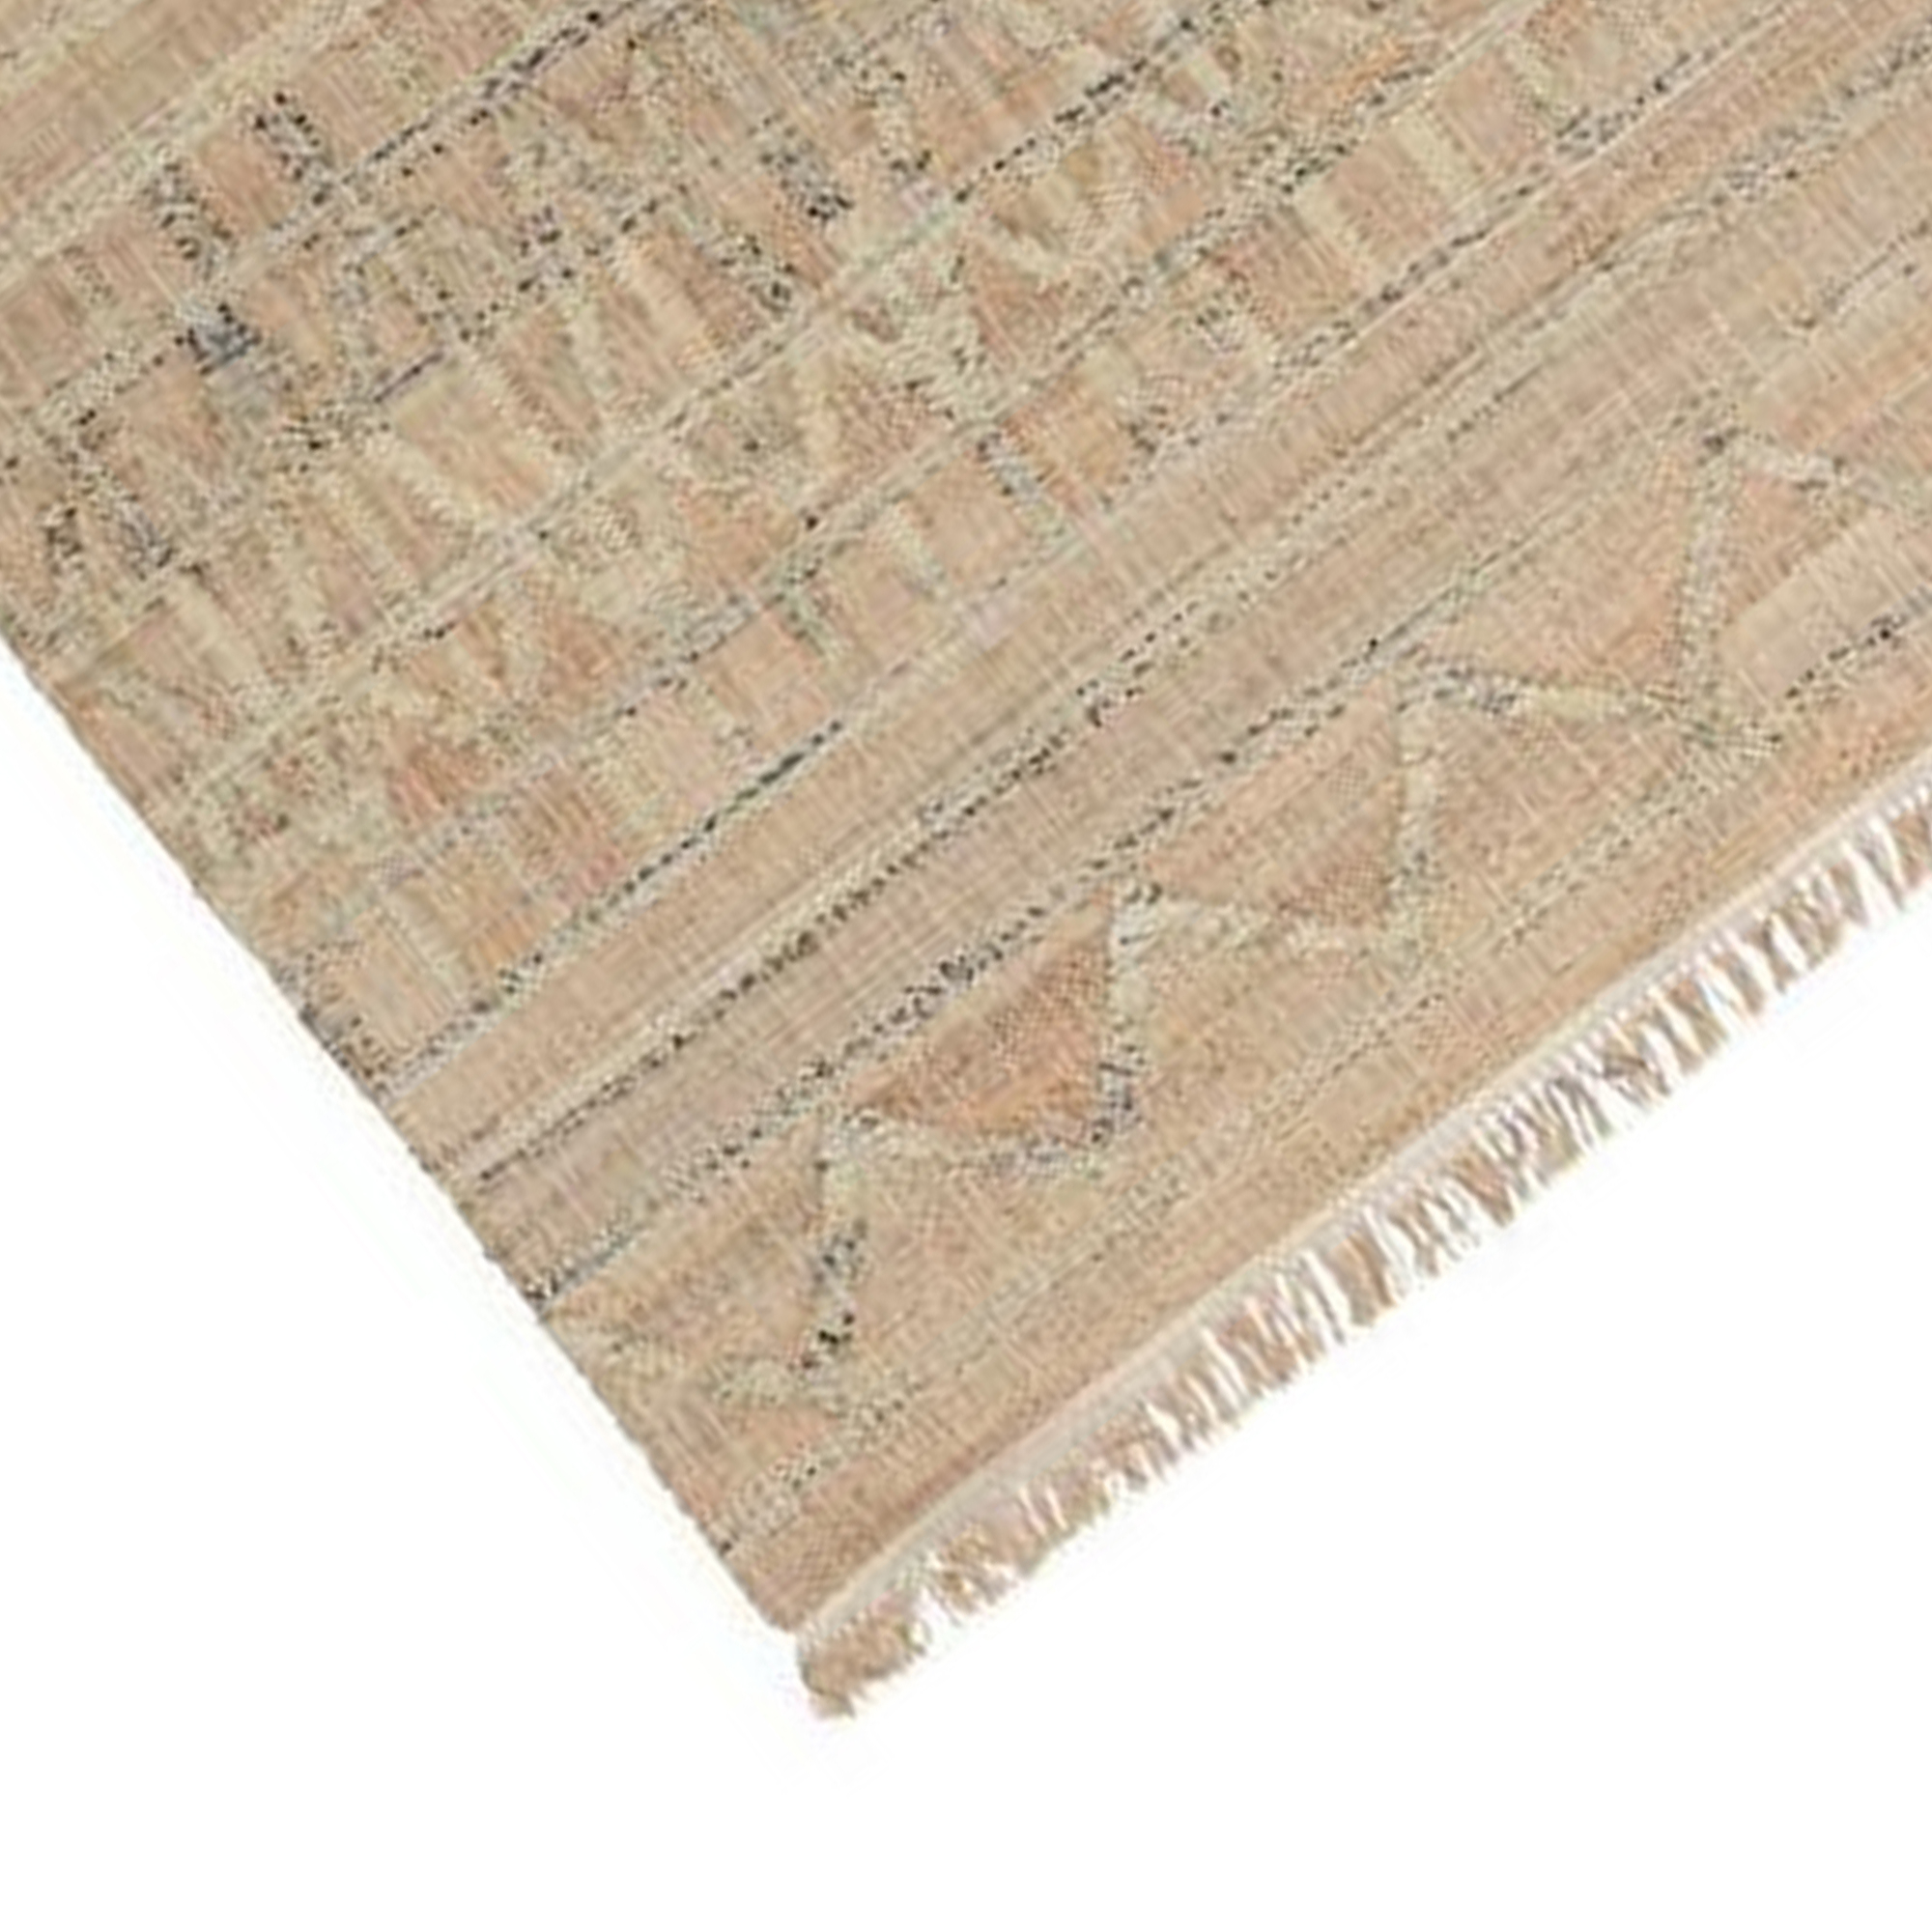 Myra 5 X 8 Area Rug, Handwoven Jute, Moroccan Style Pattern, Natural Brown- Saltoro Sherpi